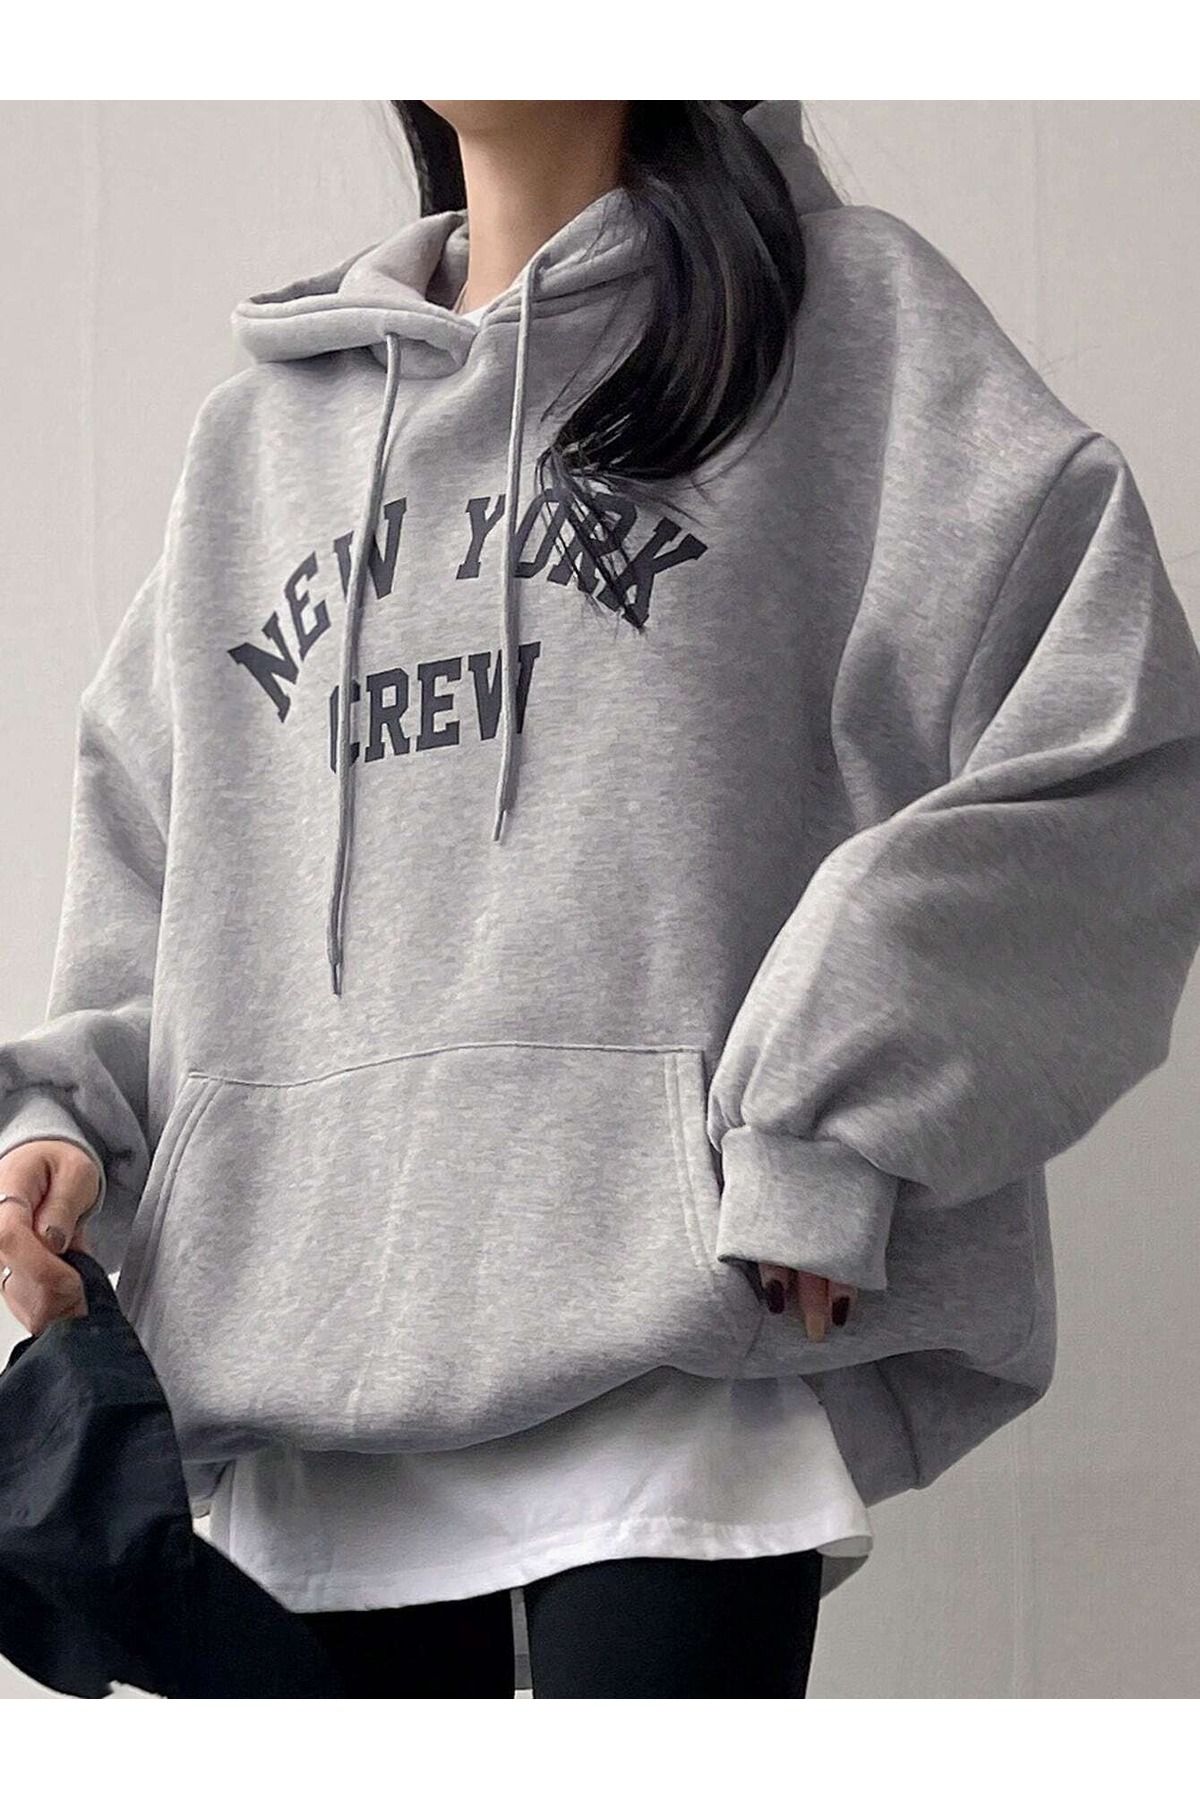 MODARİCH New York Crew Sweatshirt - Gray Printed Oversize Ribbon